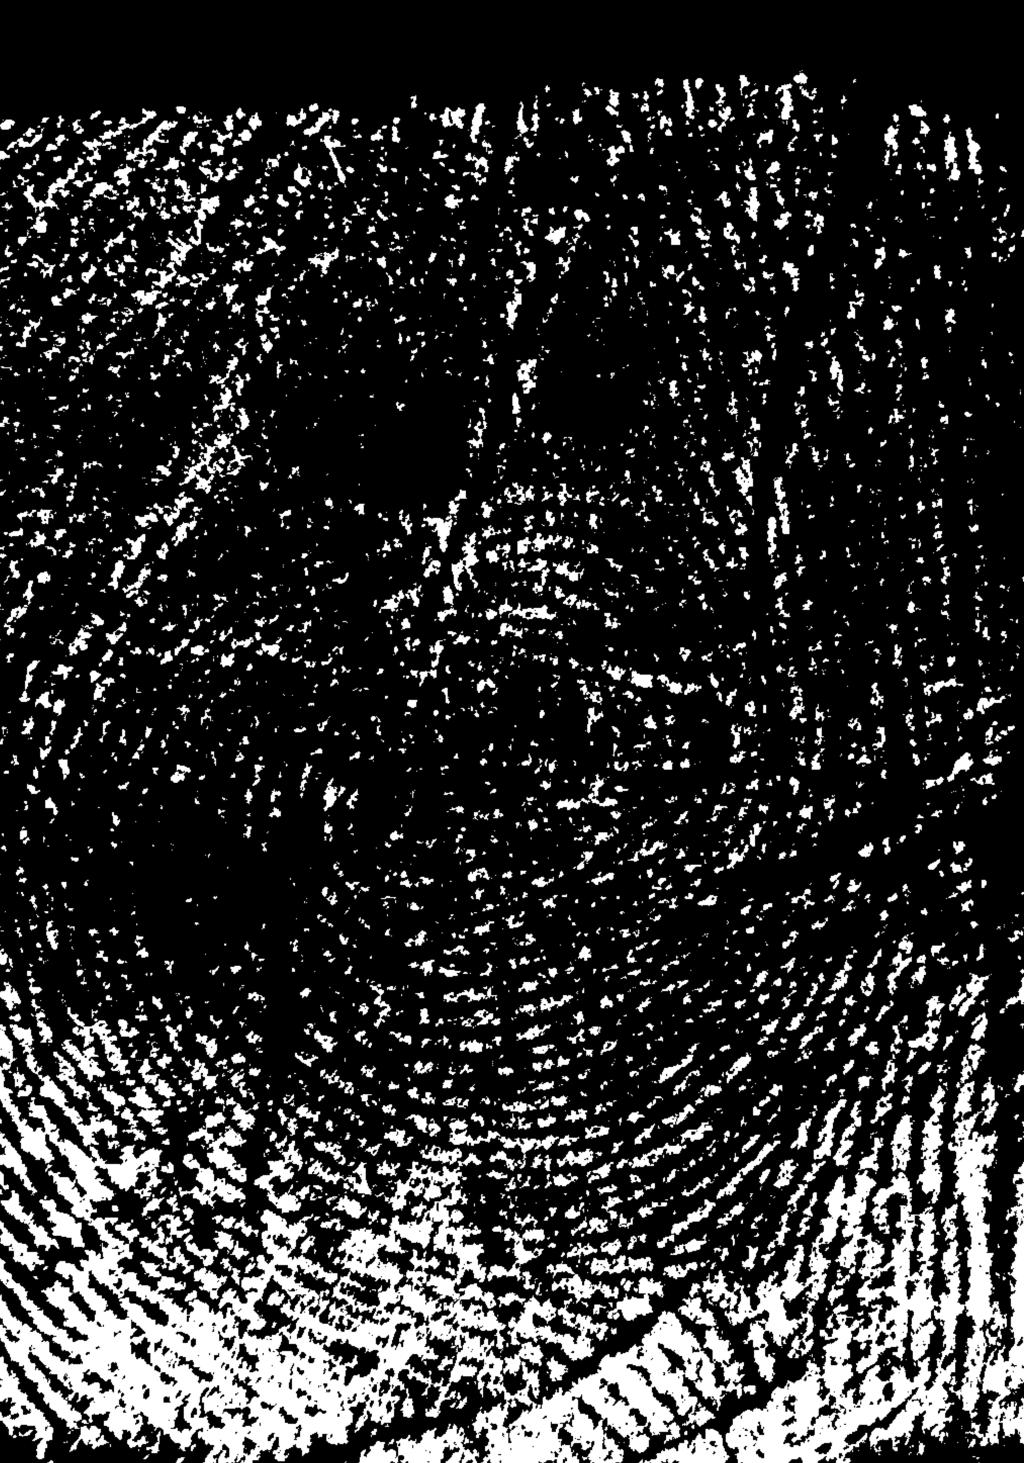 fingerprint ridges appear.